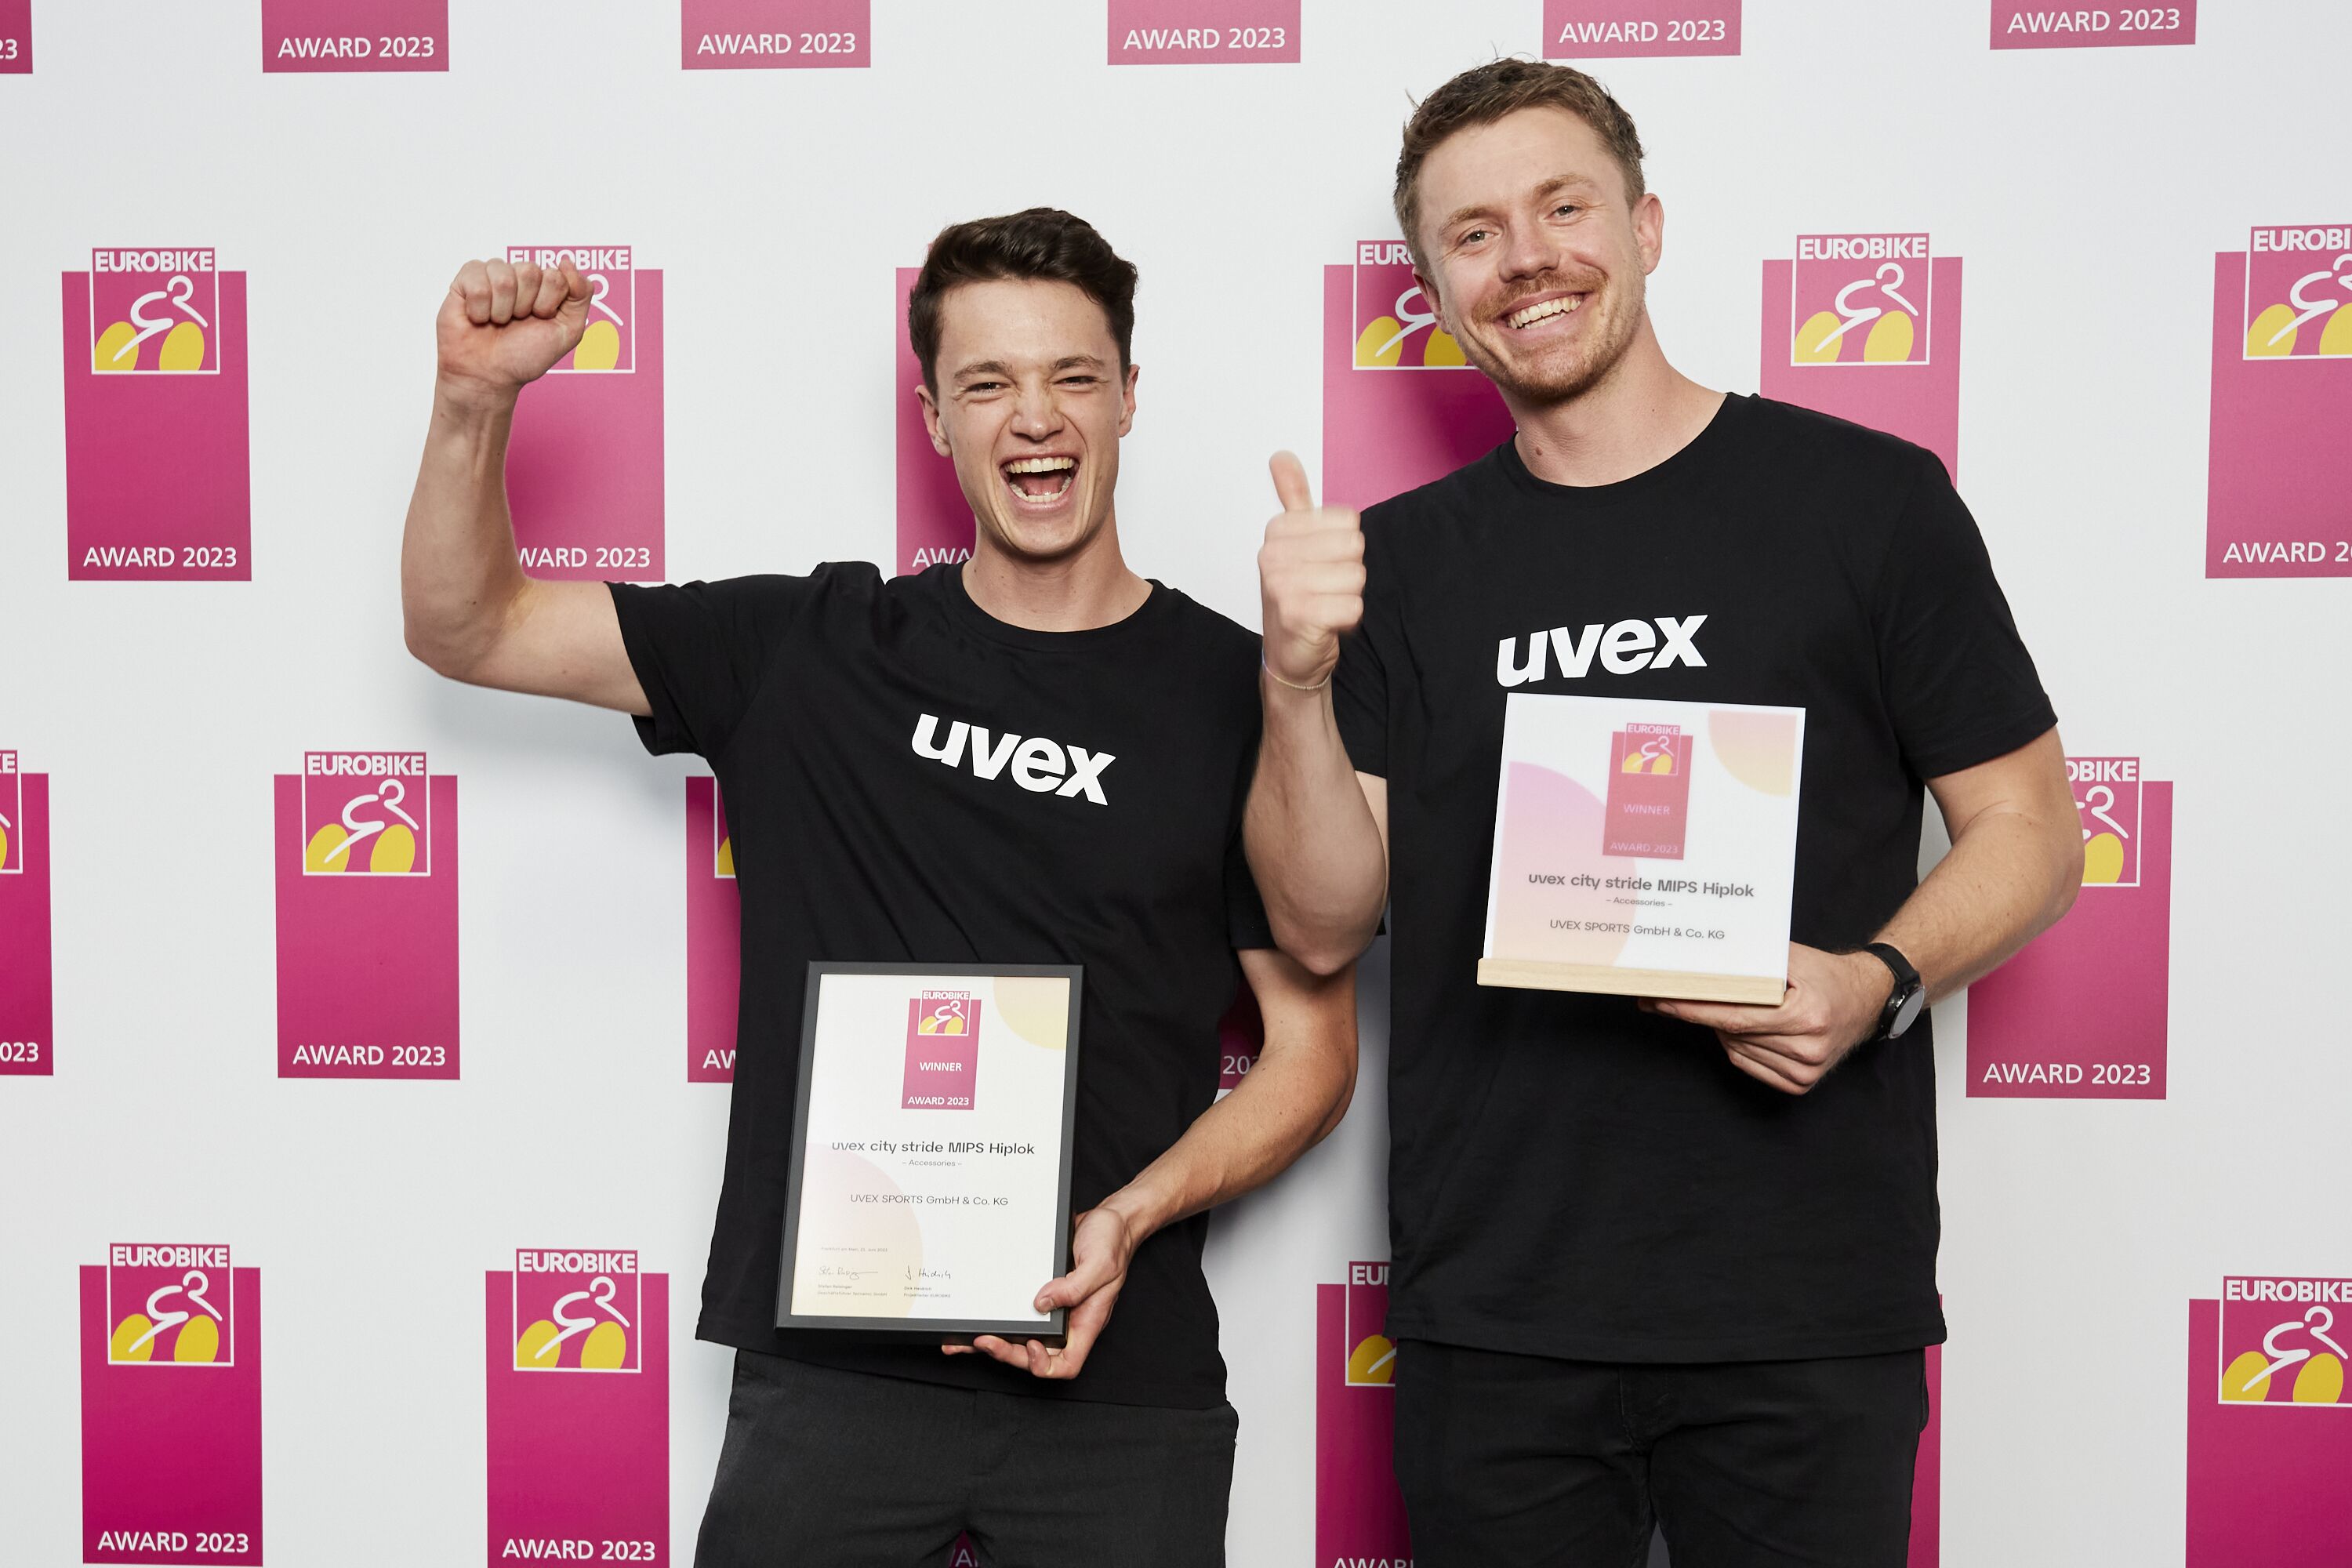 Gewinner Award: UVEX Sports; City Stride MIPS Hiplok